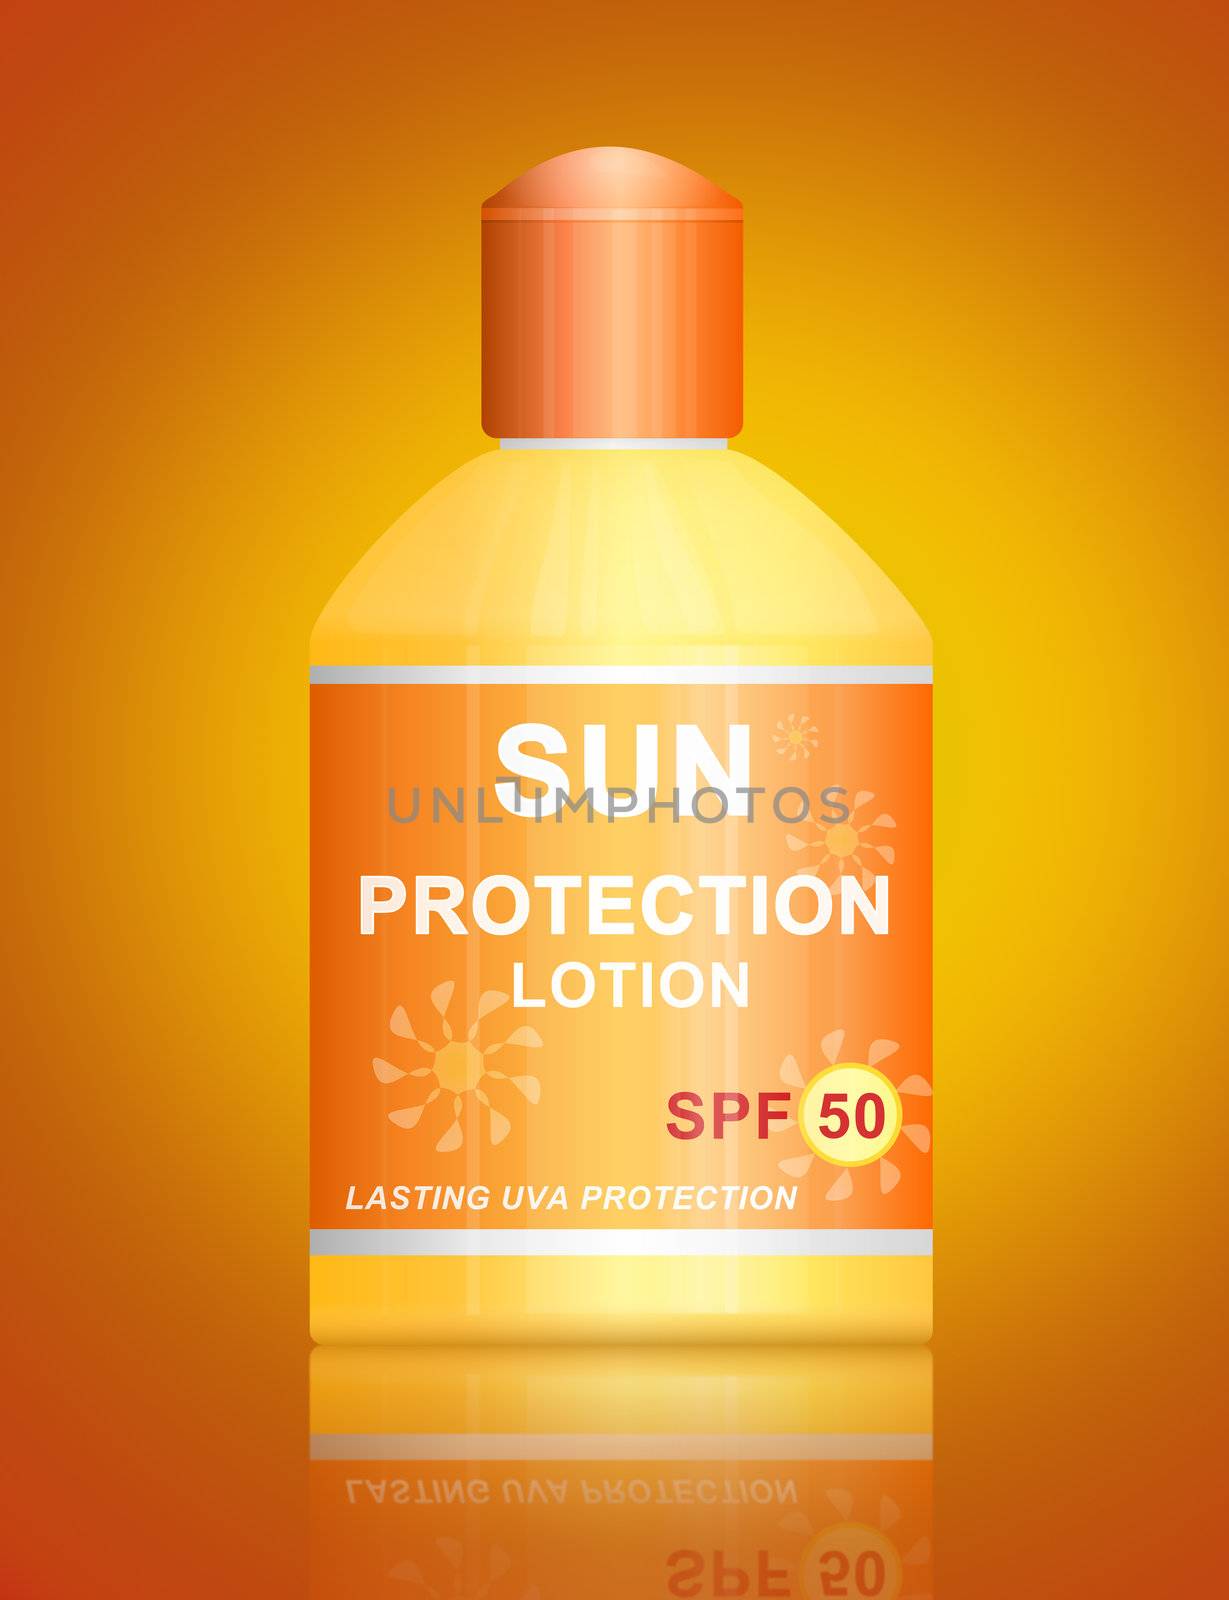 Illustration depicting a single uva SPF 50 sun protection lotion bottle arranged over vibrant golden background.